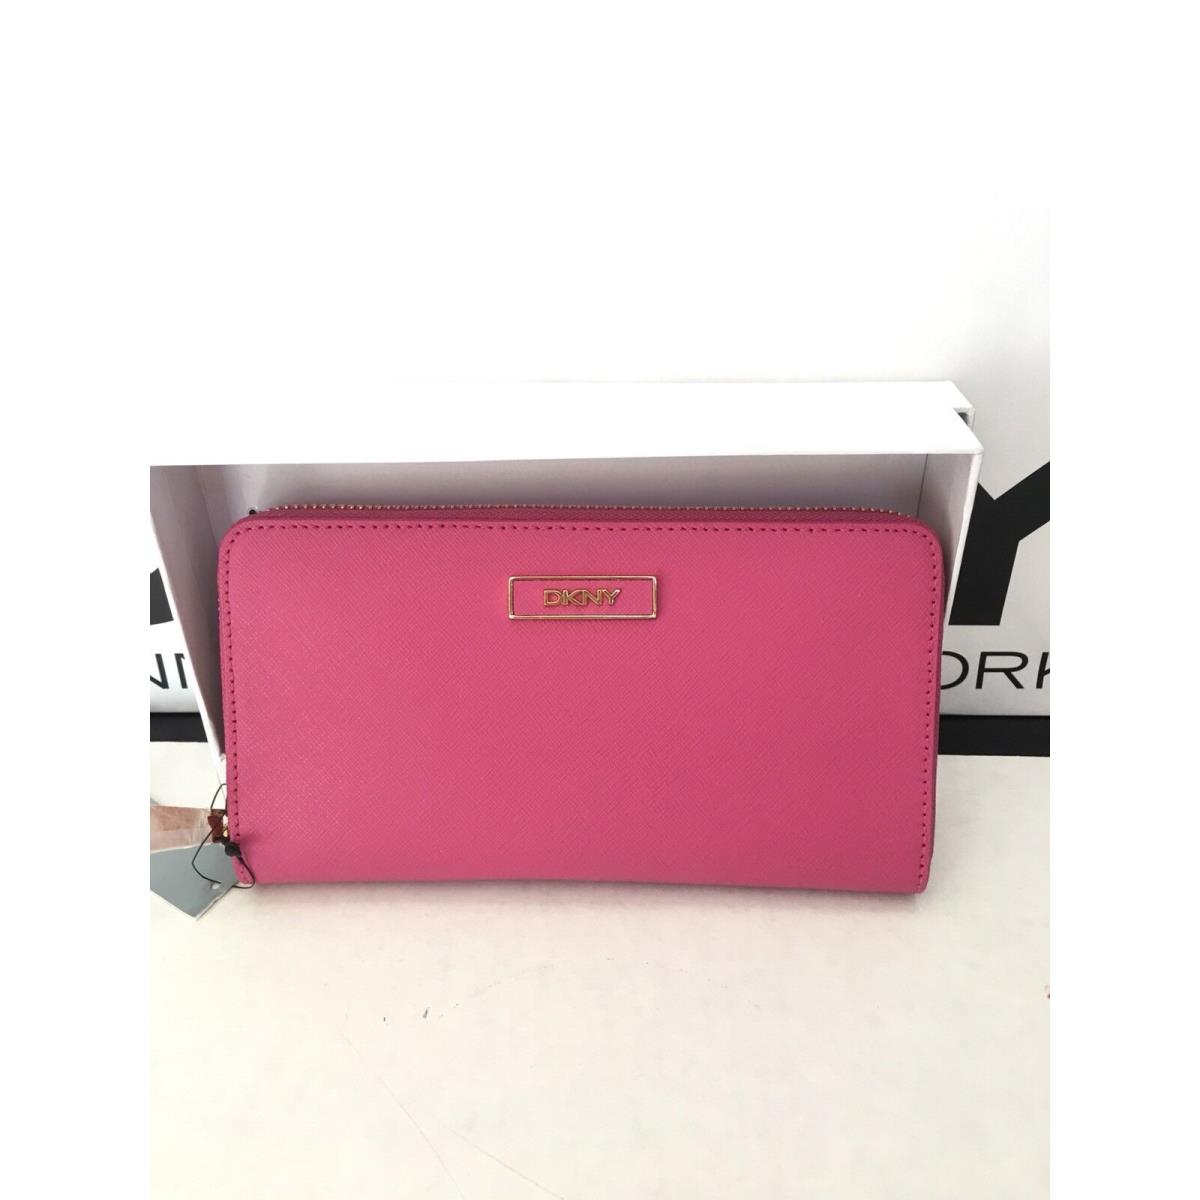 DKNY Saffiano Leather Fuchsia Pink Shoulder Bag Crossbody RRP £175.00